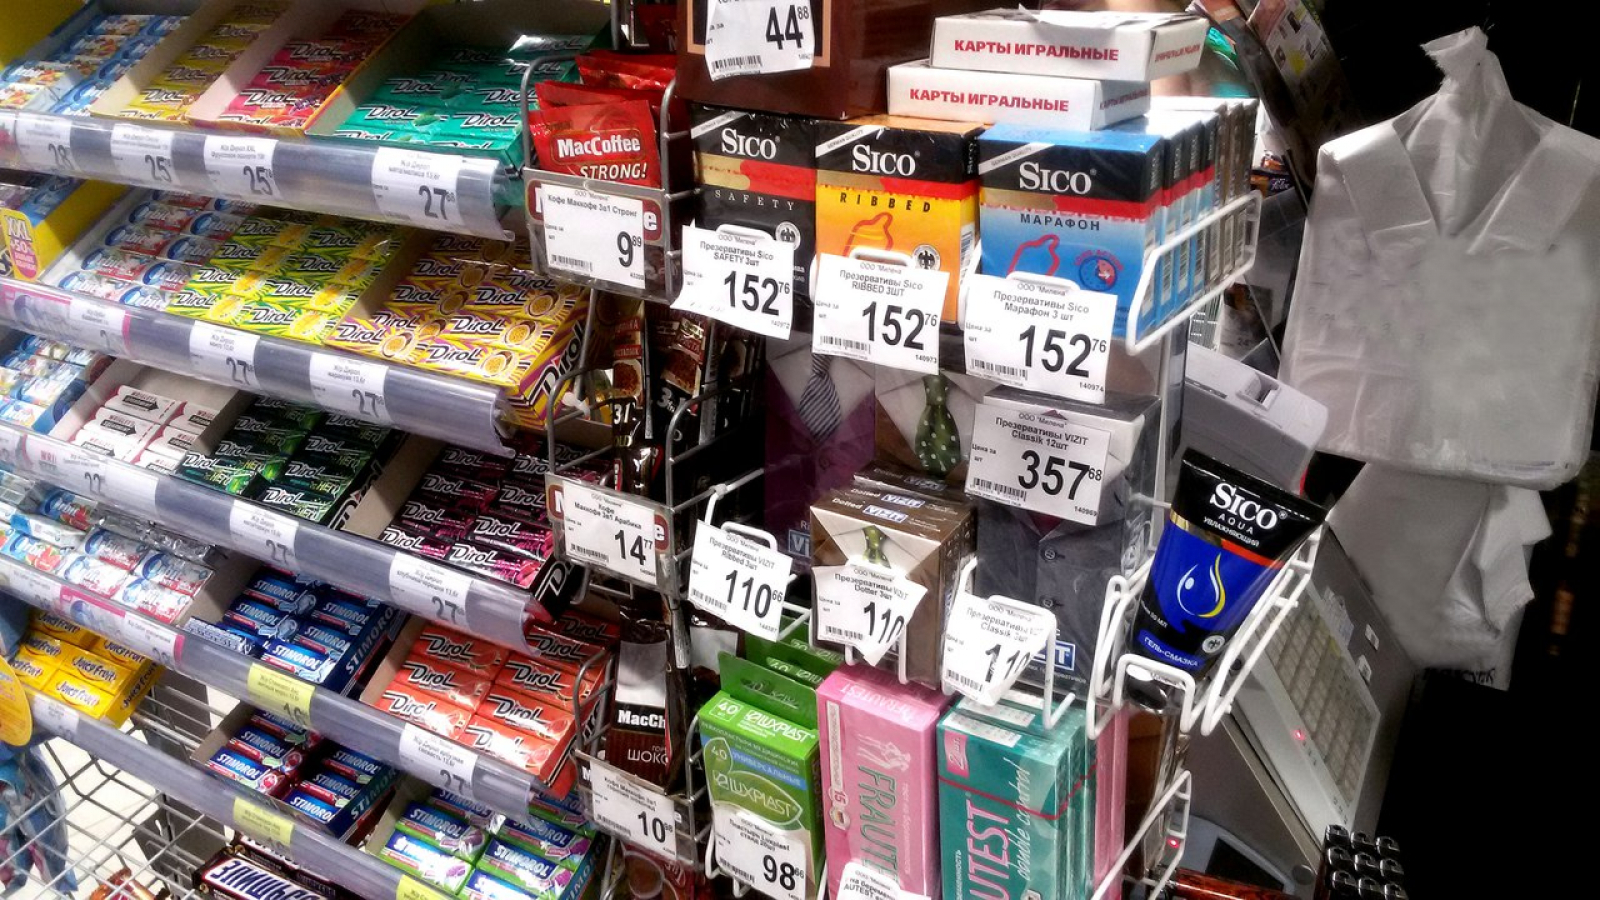 магазин презервативная в москве